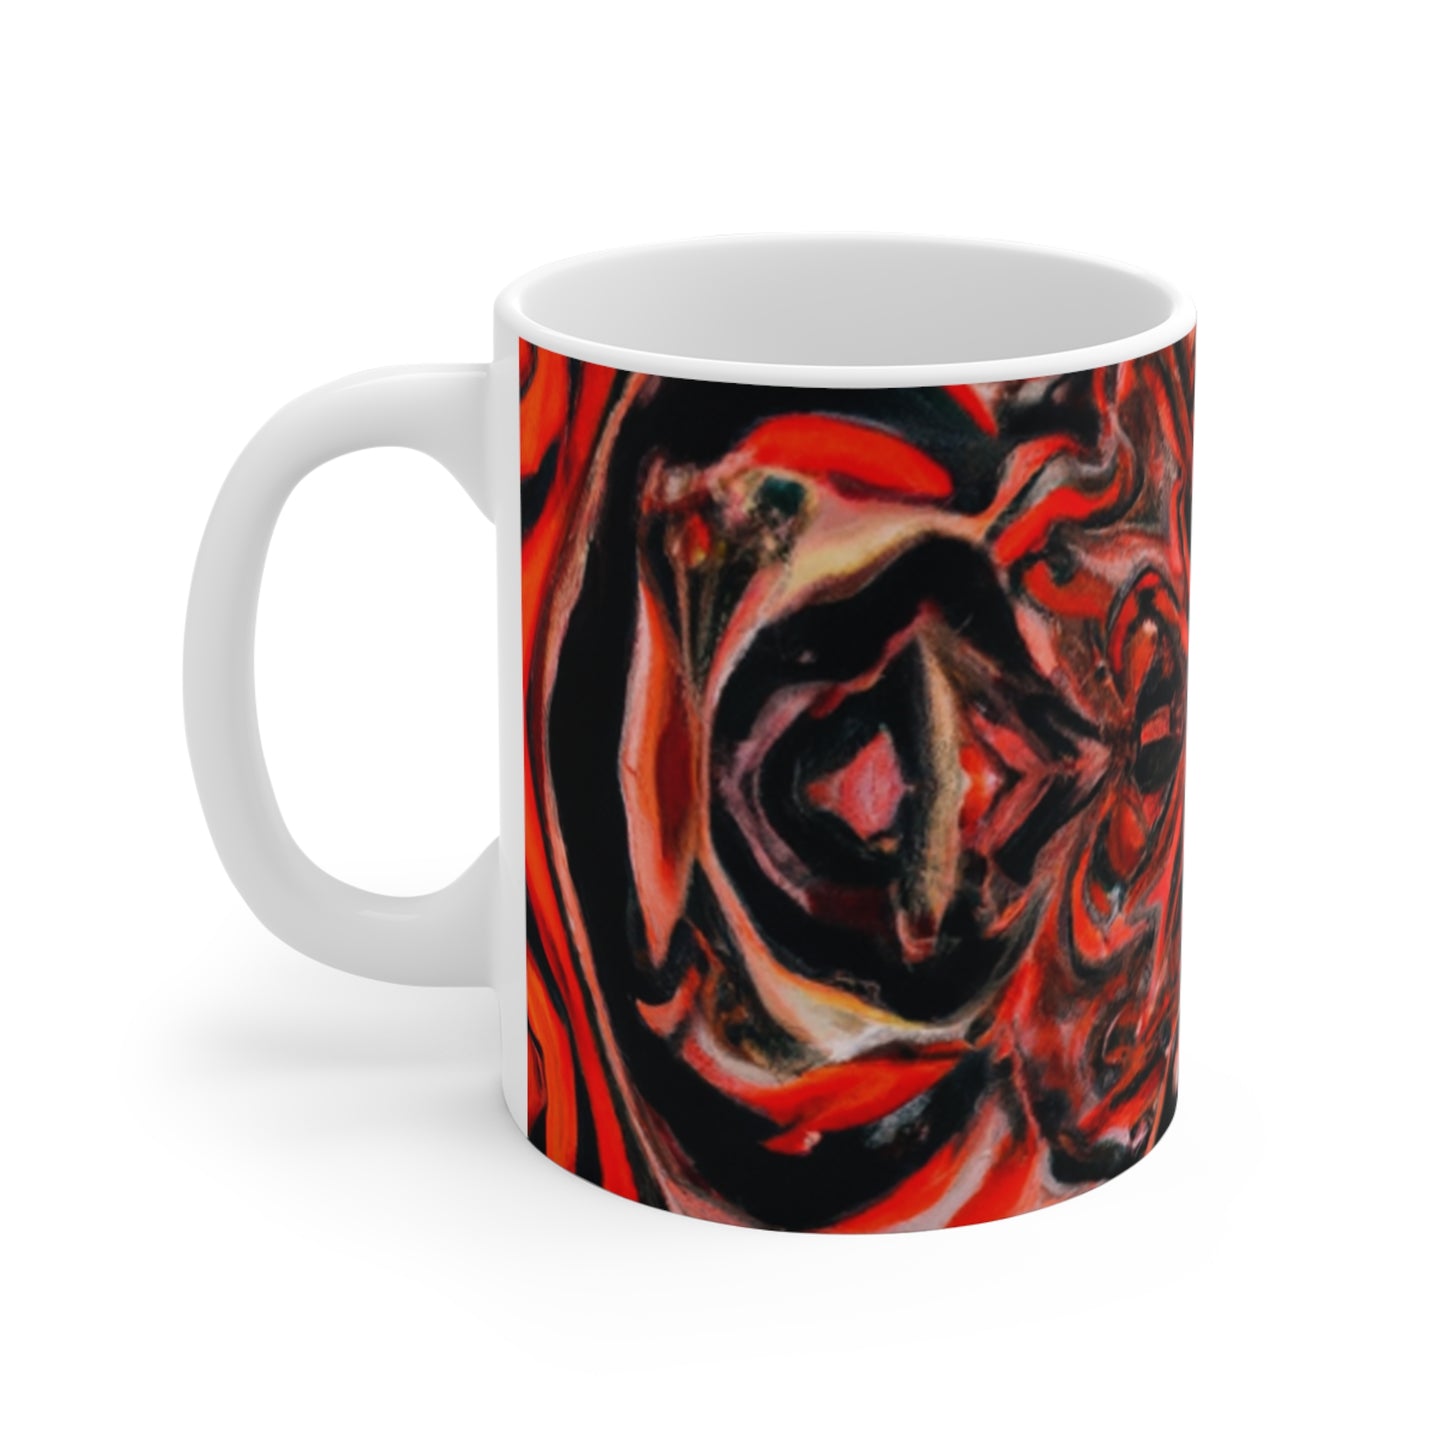 Hope's Coffee Percolators - Psychedelic Coffee Cup Mug 11 Ounce